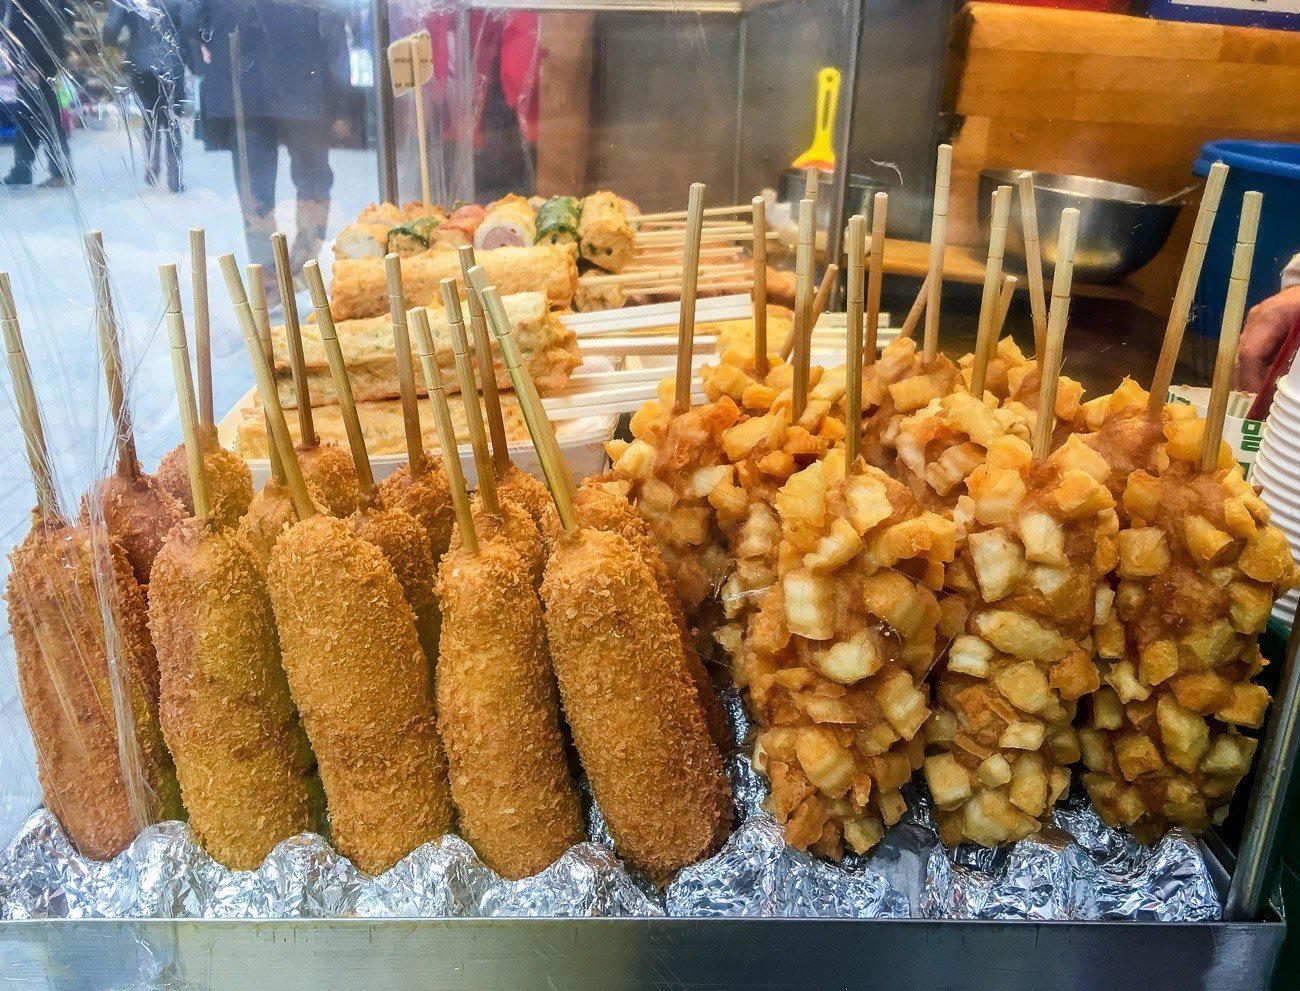 Best Korea puts crinkle cut fries in the corn dog batter...